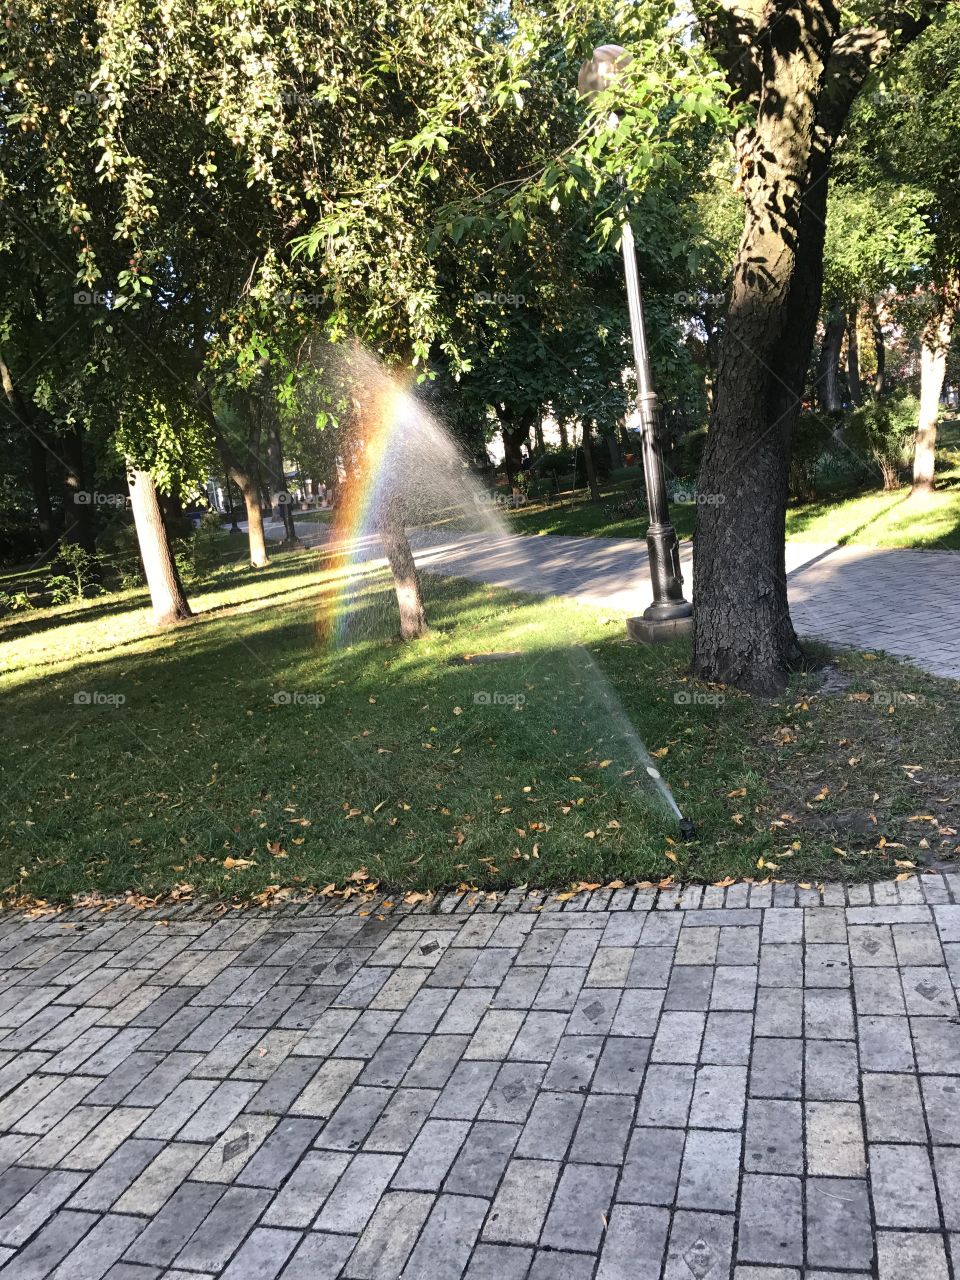 Rainbow in the park